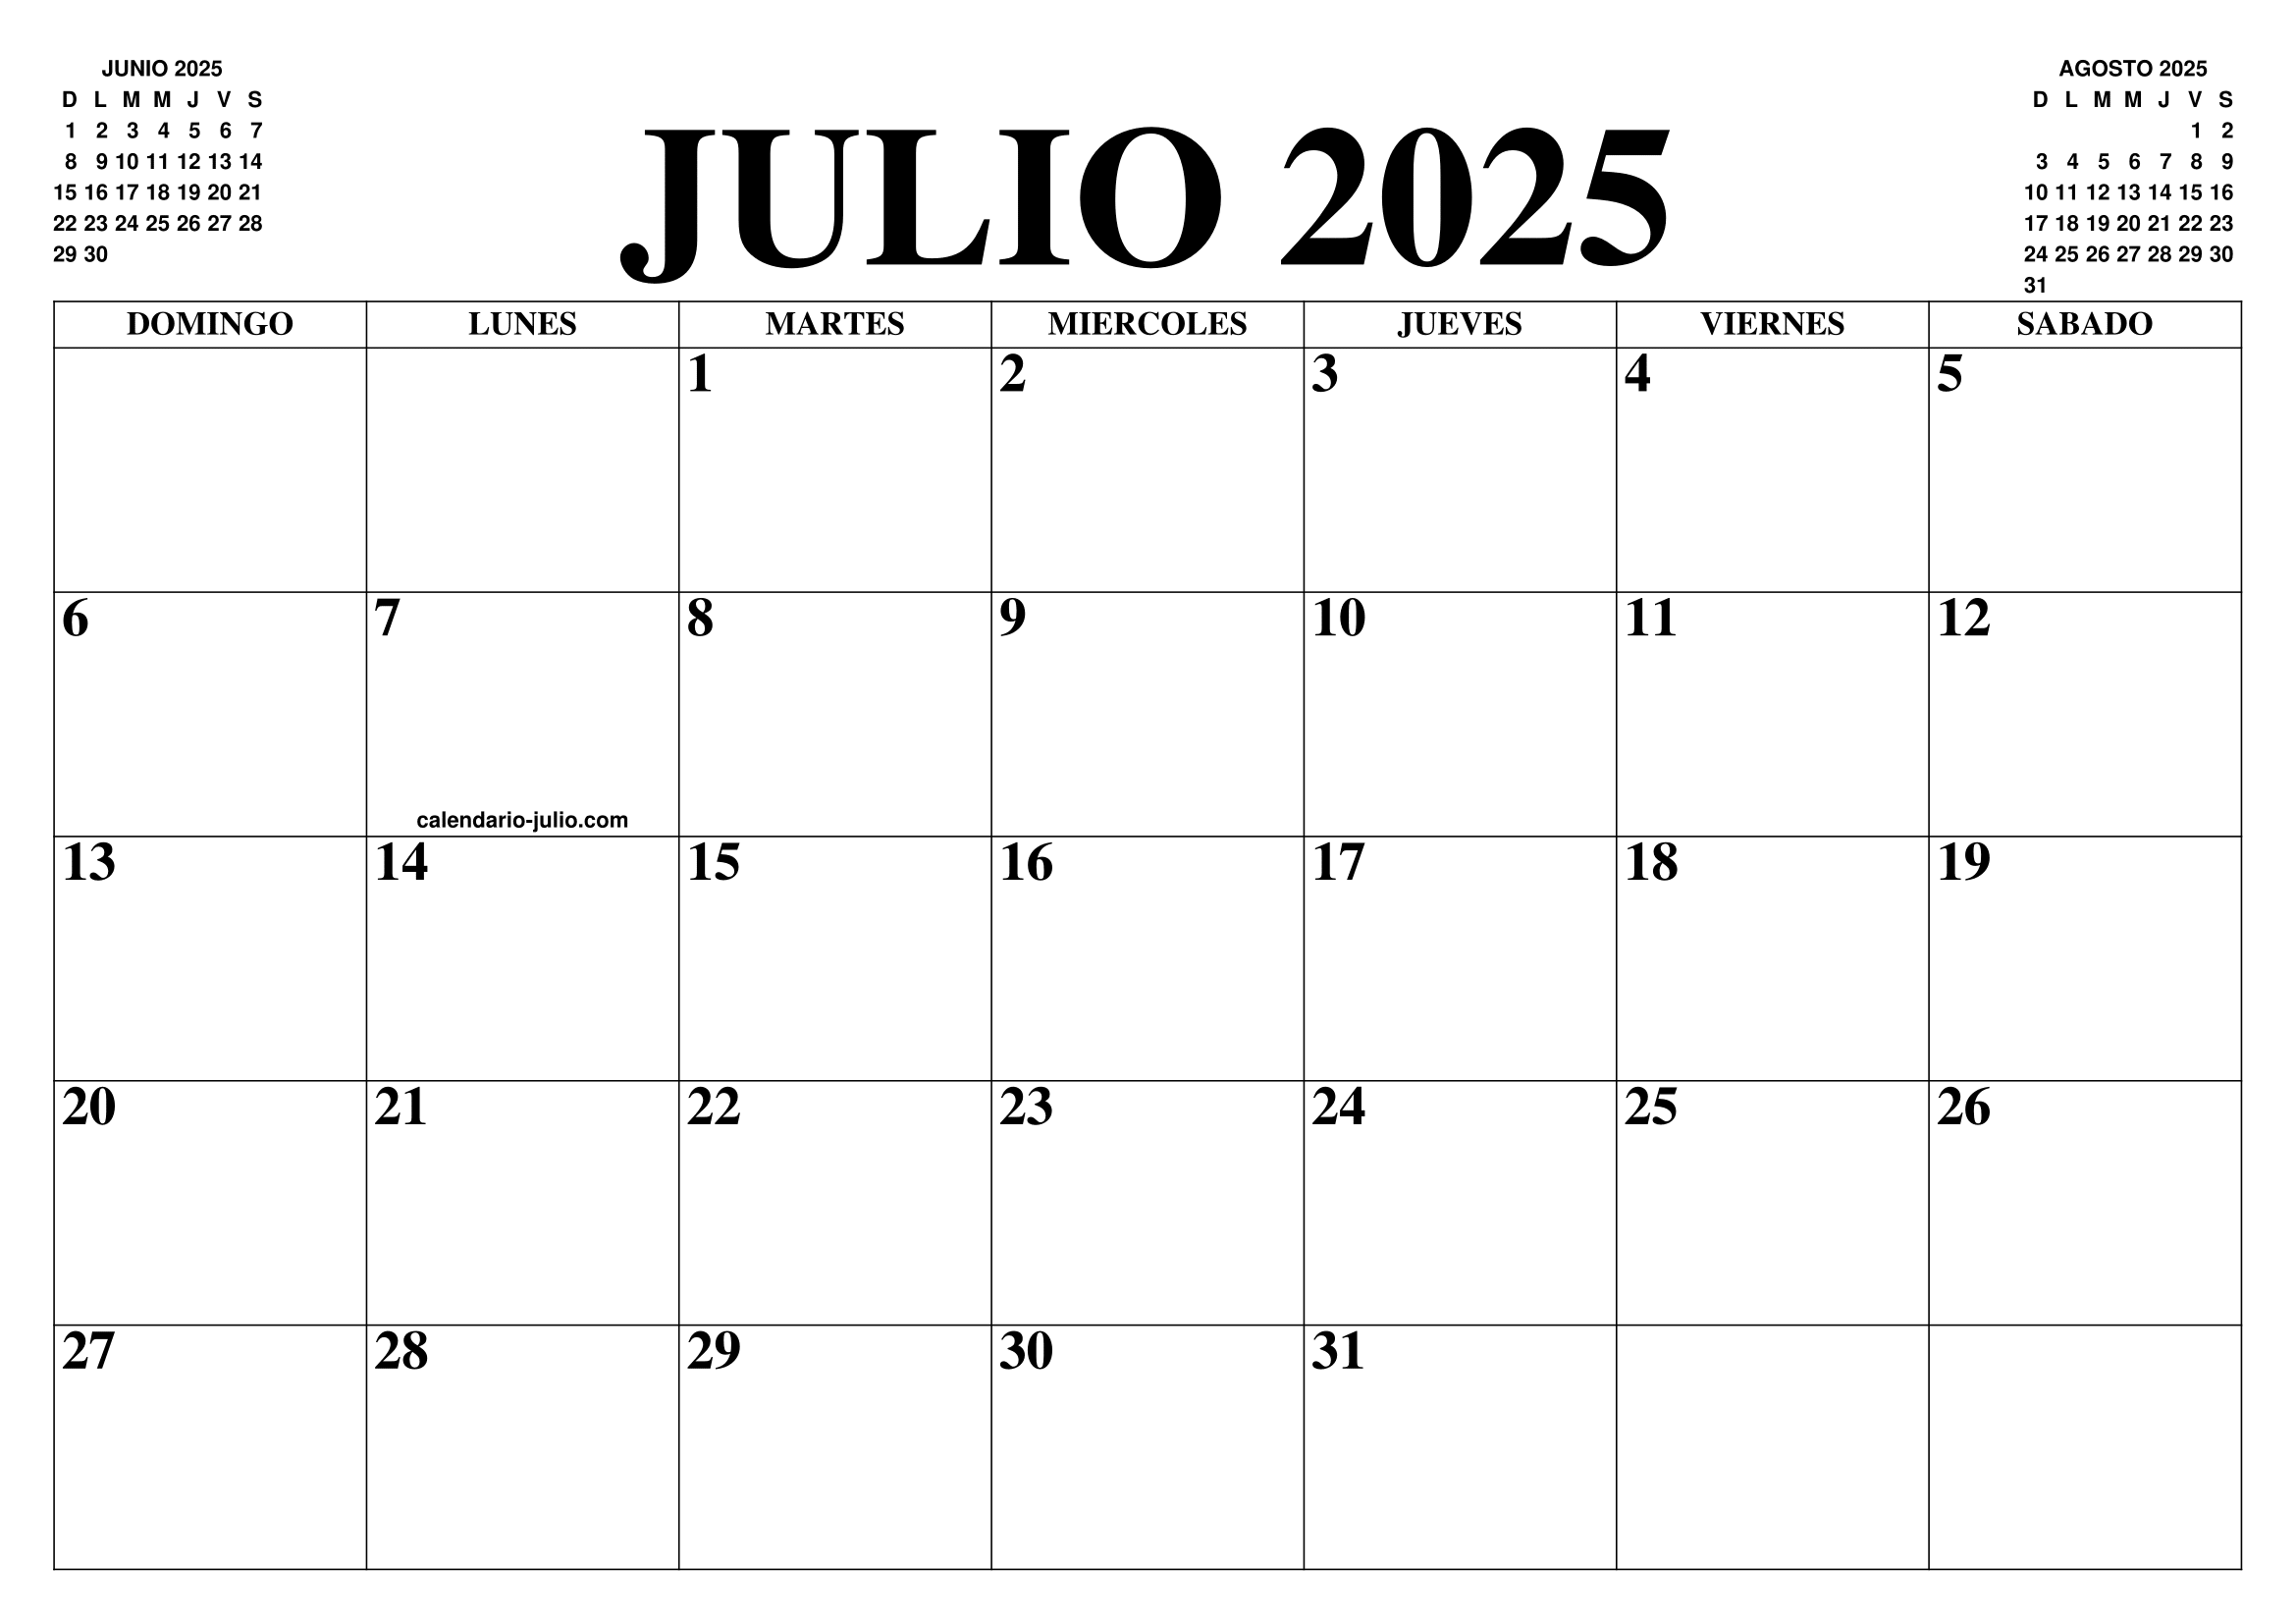 CALENDARIO JULIO 2025 EL CALENDARIO JULIO PARA IMPRIMIR GRATIS MES